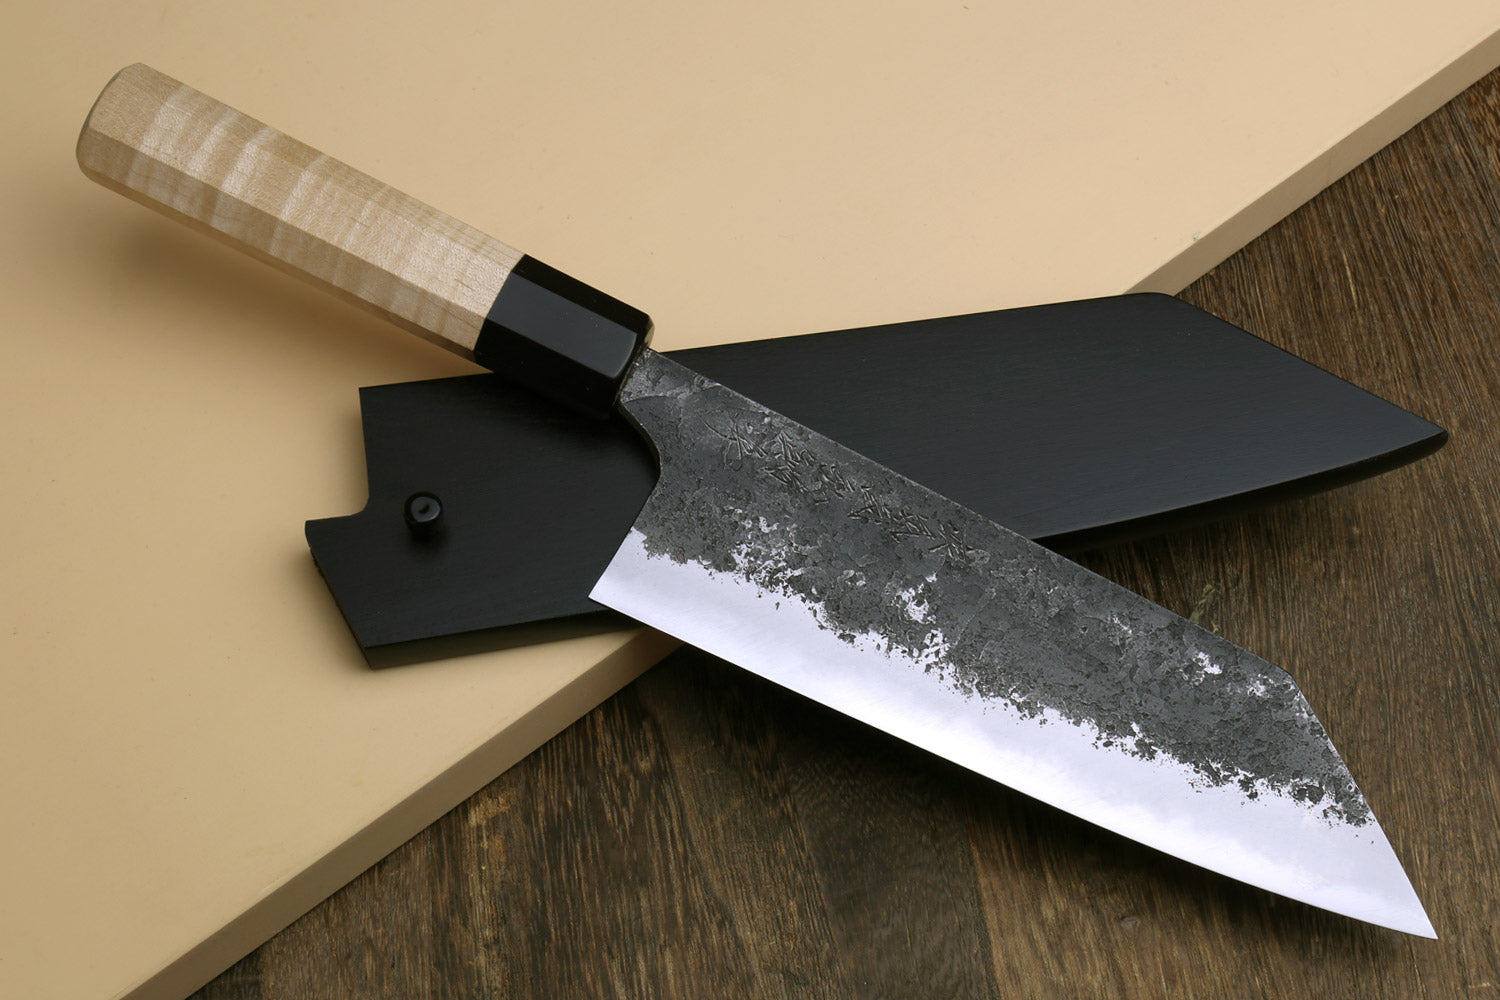 Japanese High Carbon White Steel Stainless Clad Kiridashi Pocket Knife –  Yoshihiro Cutlery